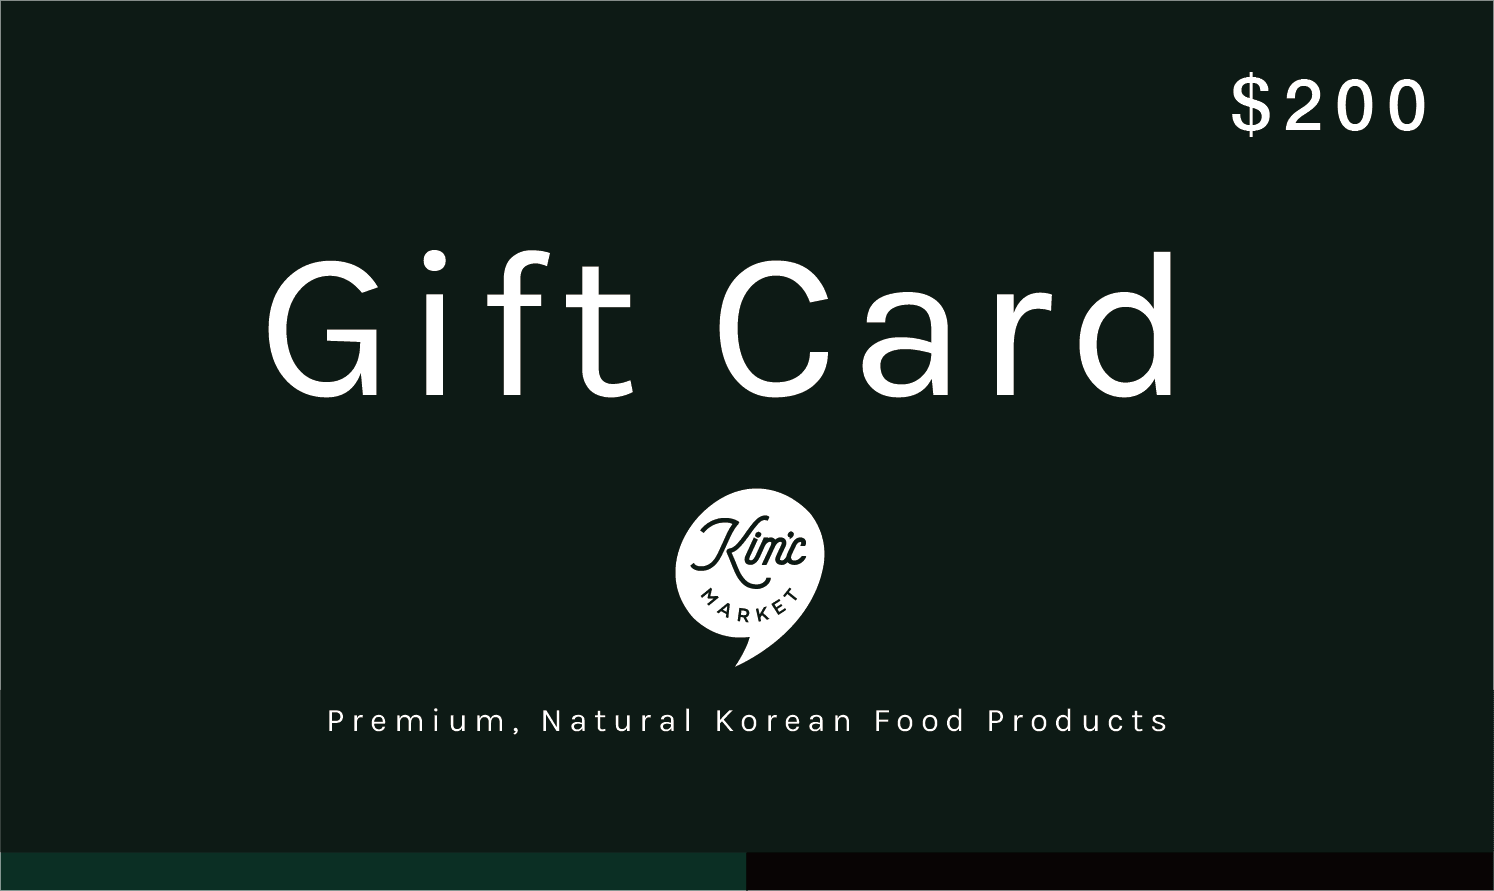 Kim'C Market Gift Card - Kim'C Market